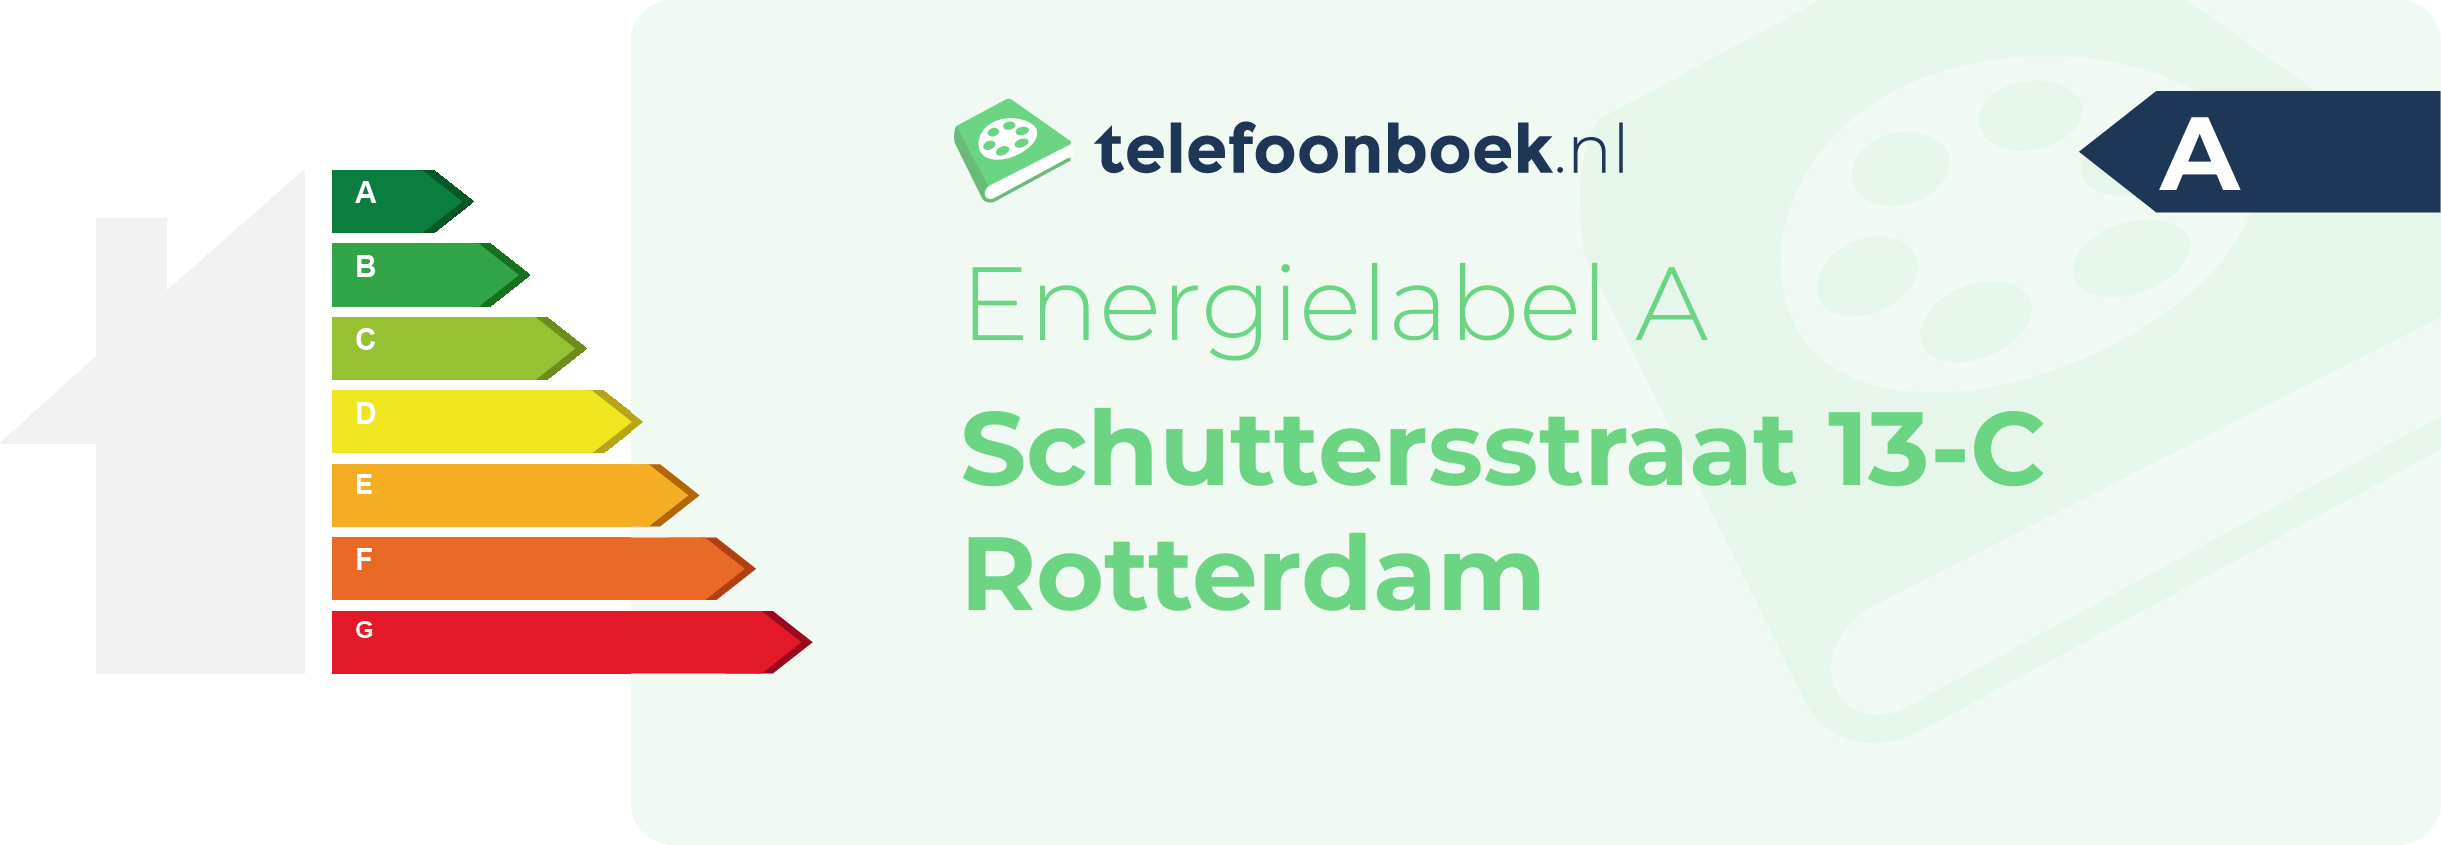 Energielabel Schuttersstraat 13-C Rotterdam